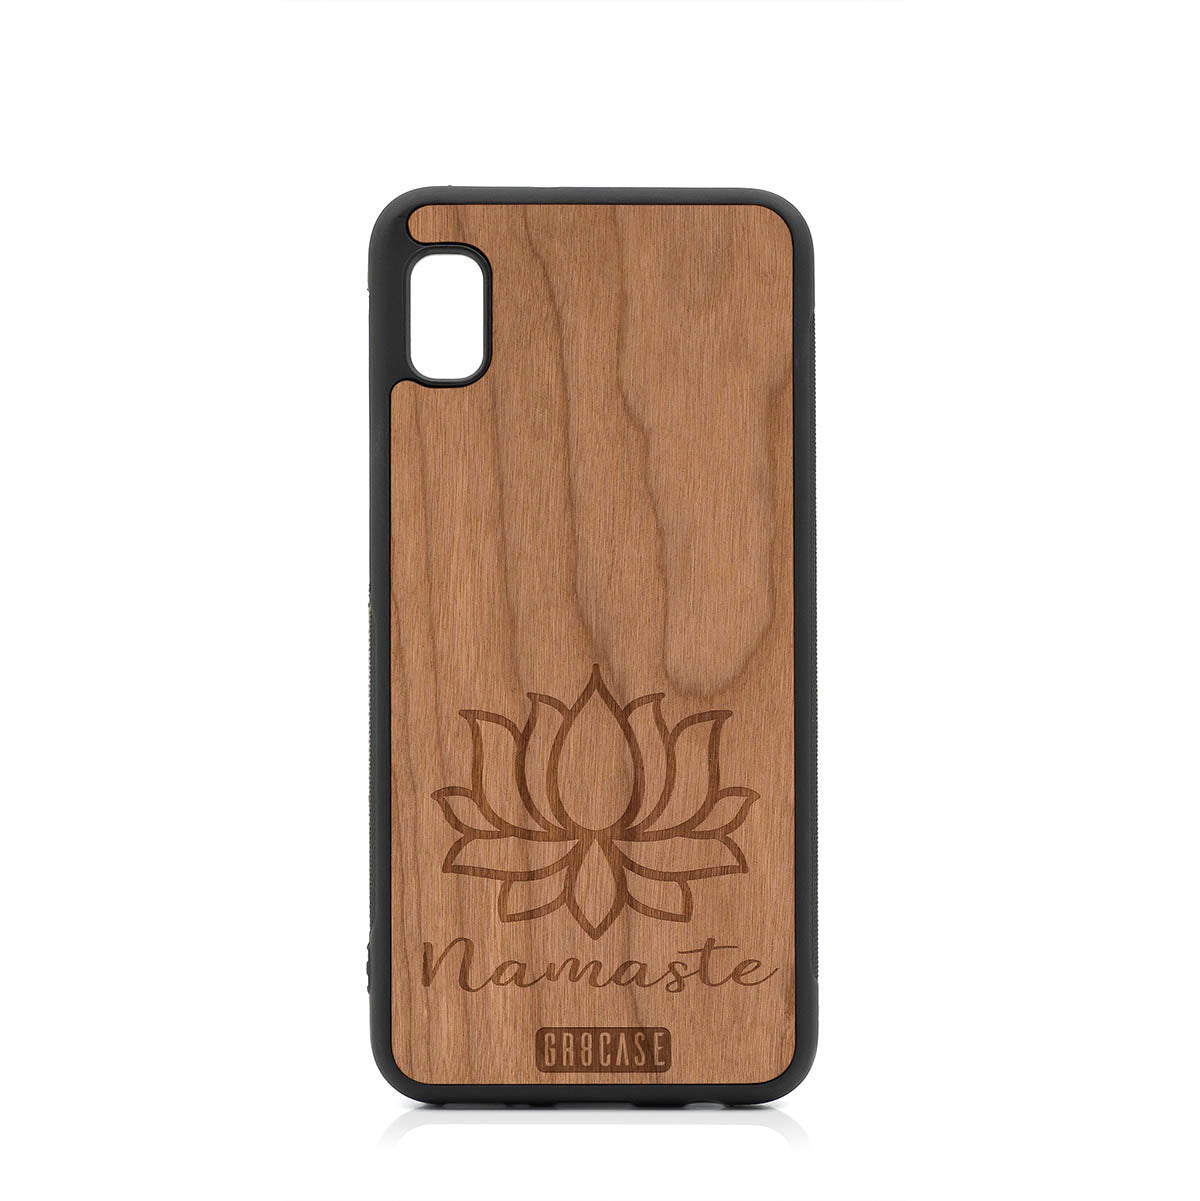 Namaste (Lotus Flower) Design Wood Case For Samsung Galaxy A10E